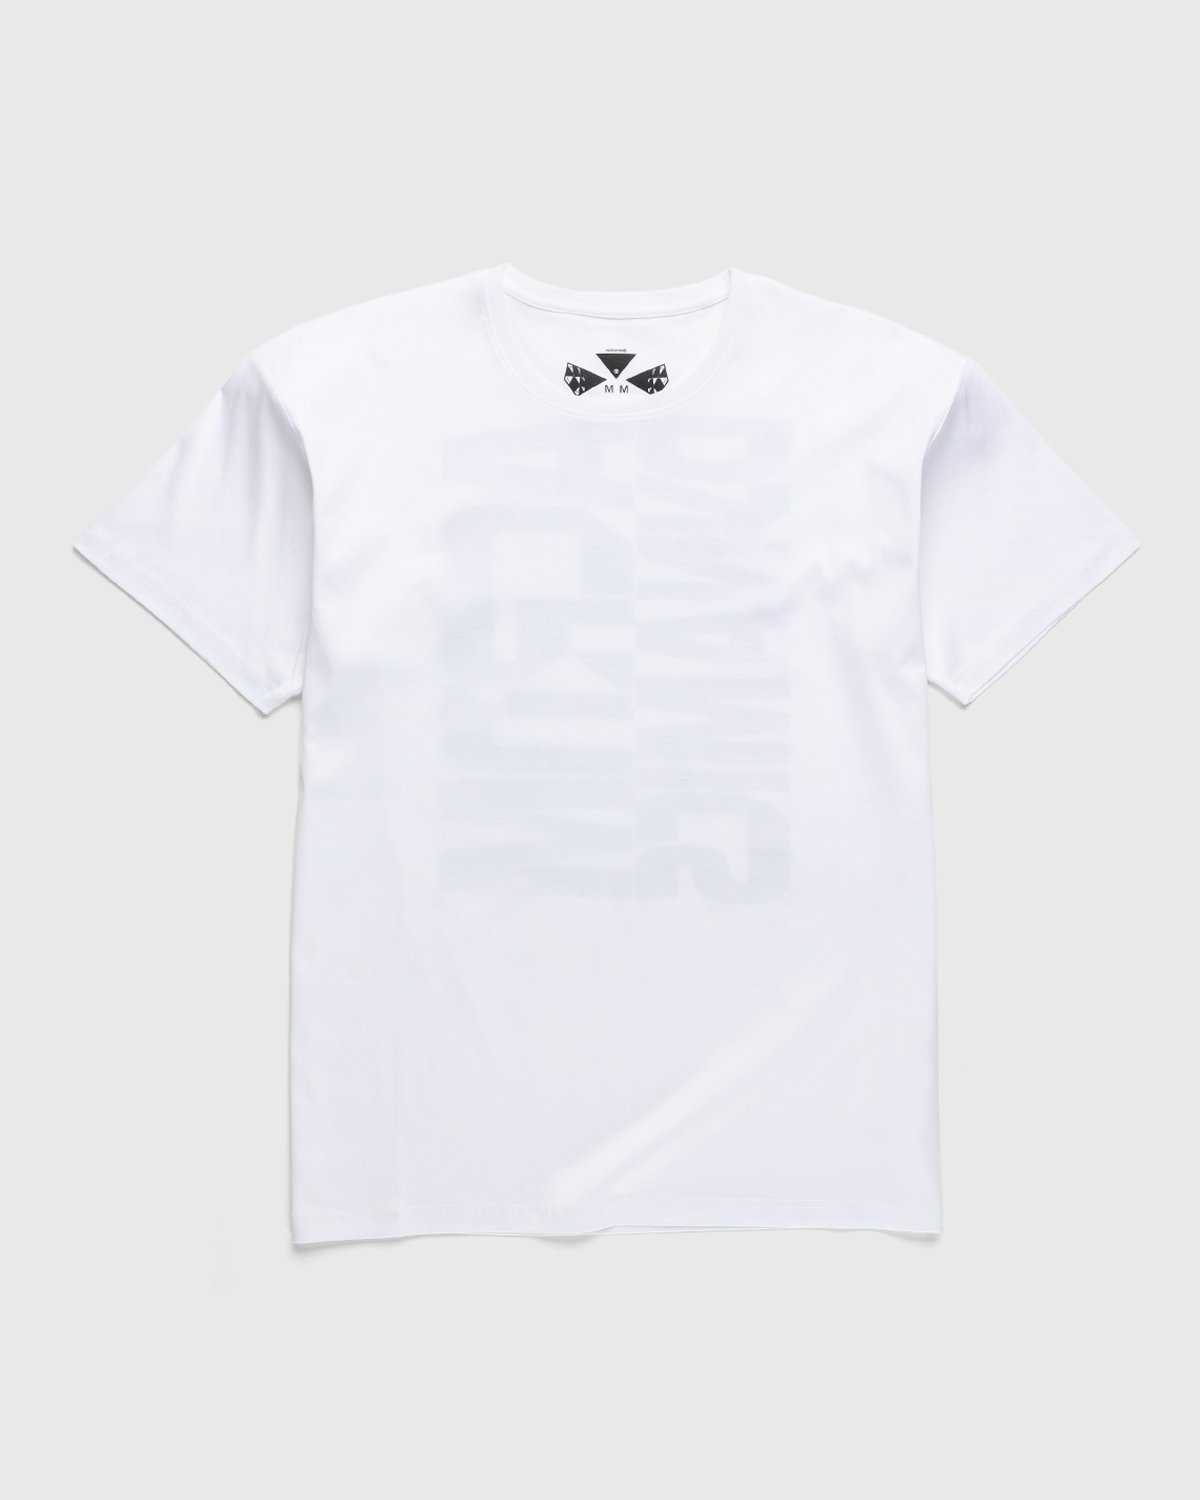 ACRONYM - S24-PR-A T-Shirt White - Clothing - White - Image 2